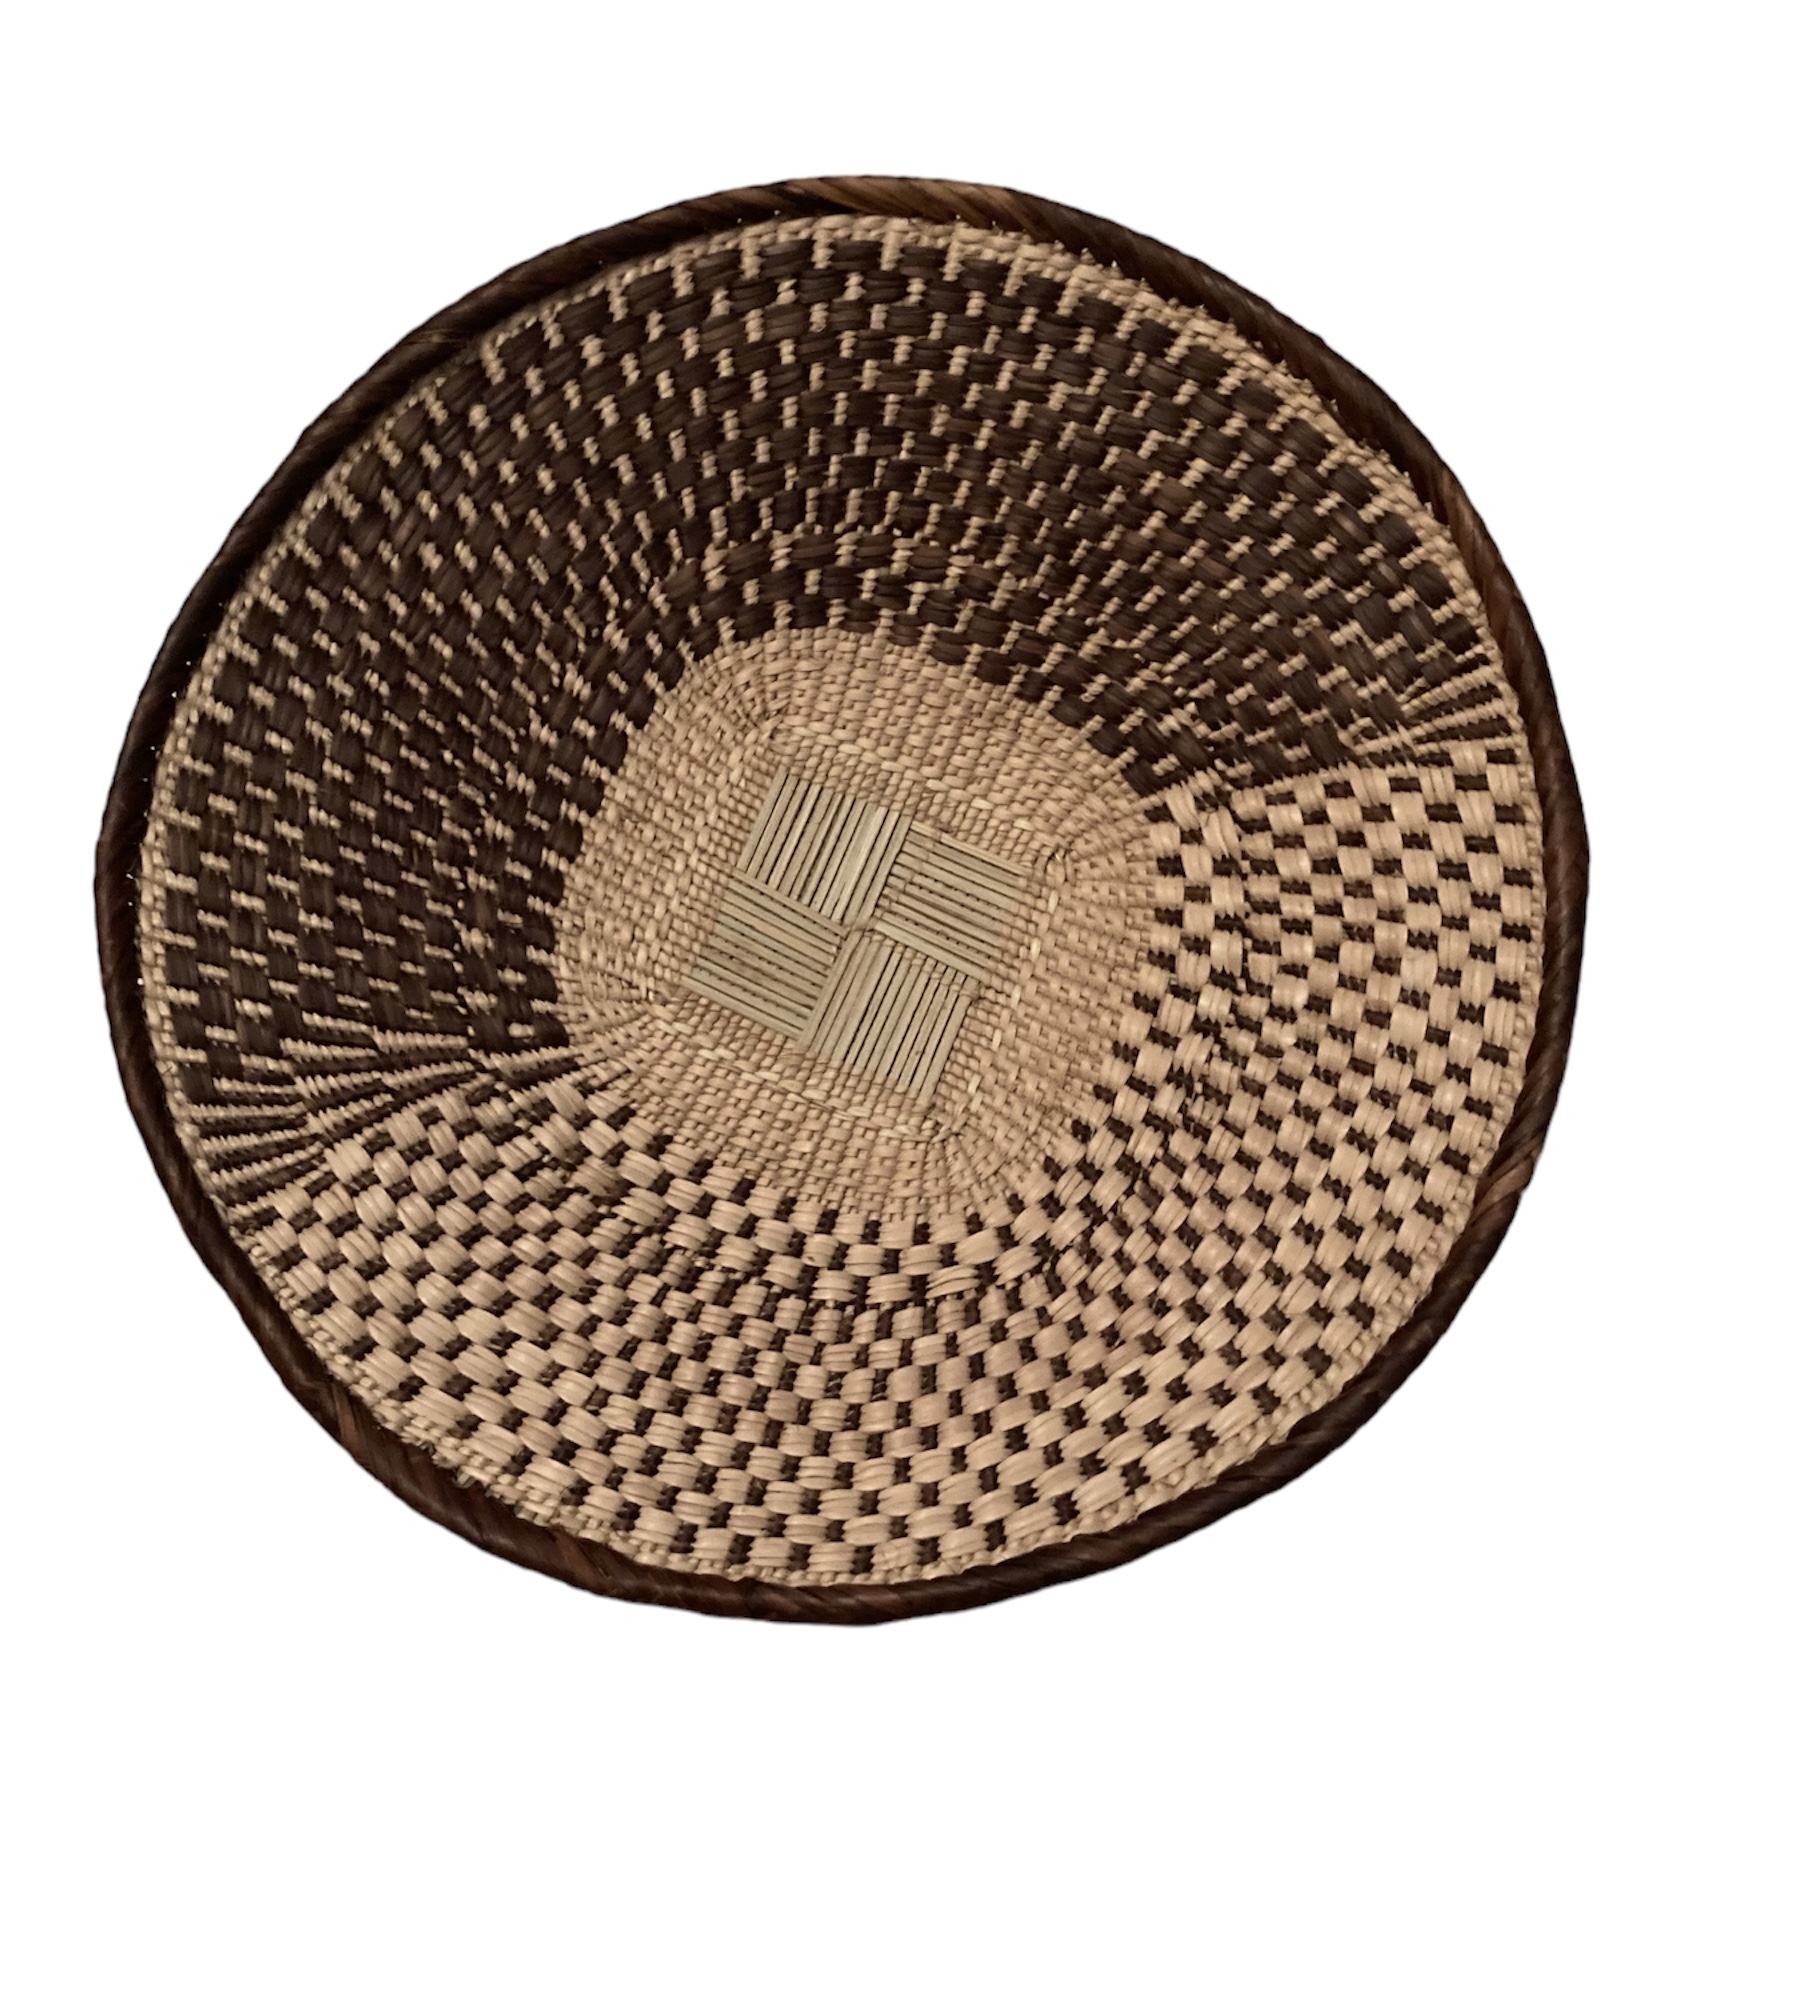 Tonga Basket from Zimbabwe - Design #003 - 13 1/2" dia.